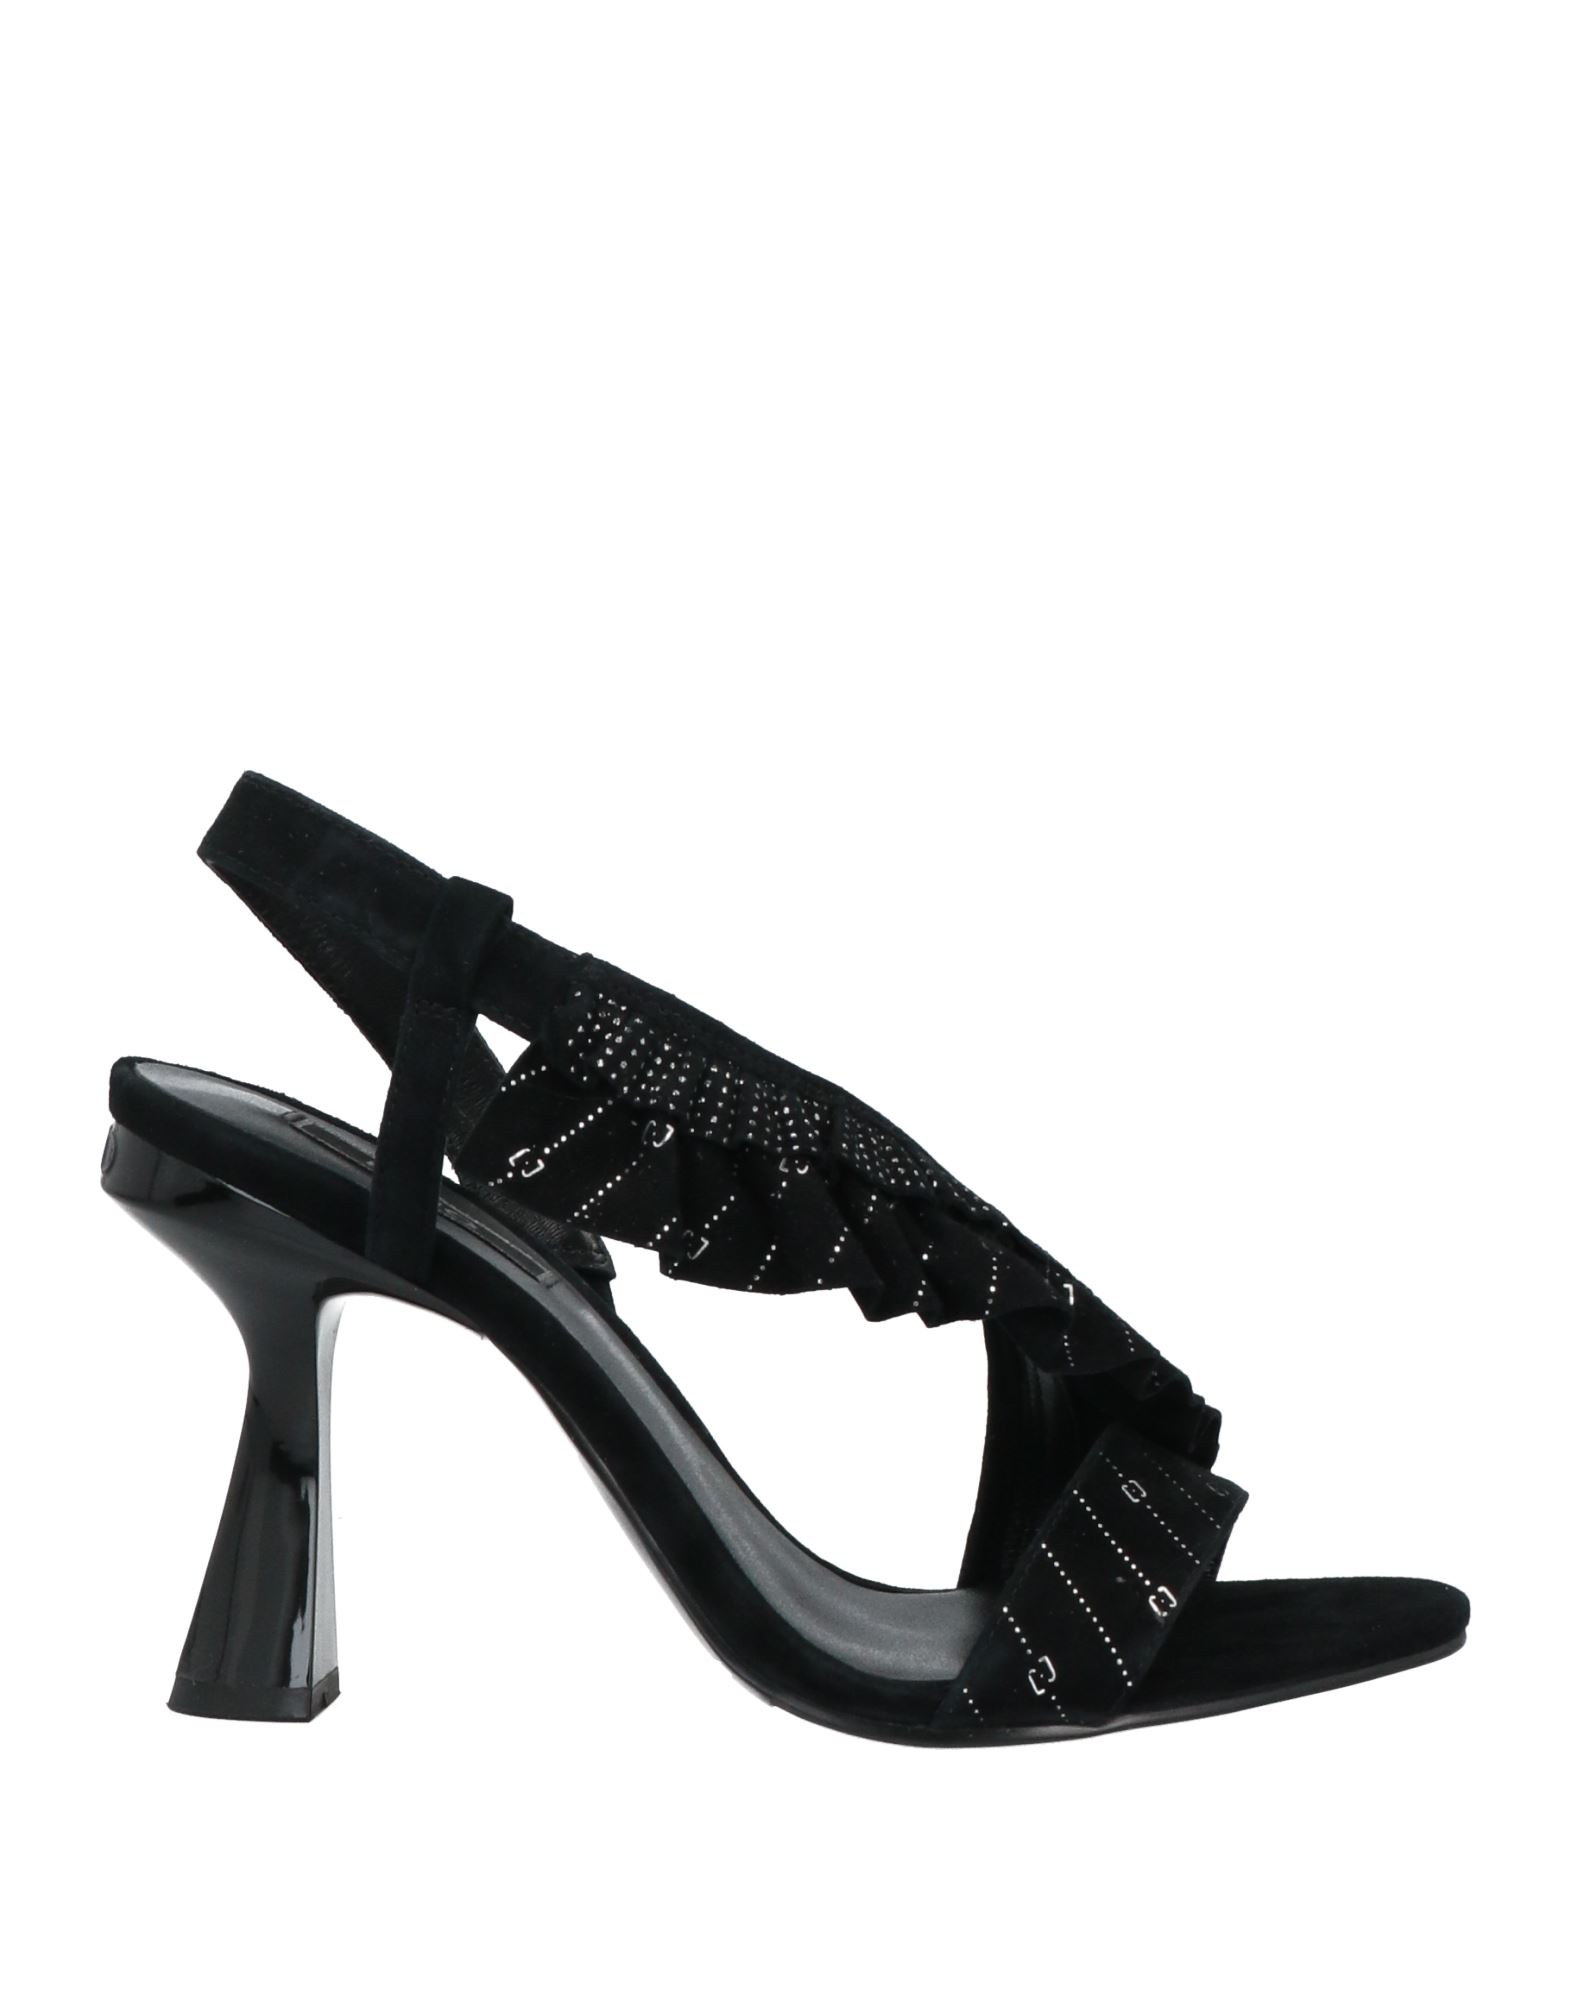 Shop Liu •jo Woman Sandals Black Size 7 Goat Skin